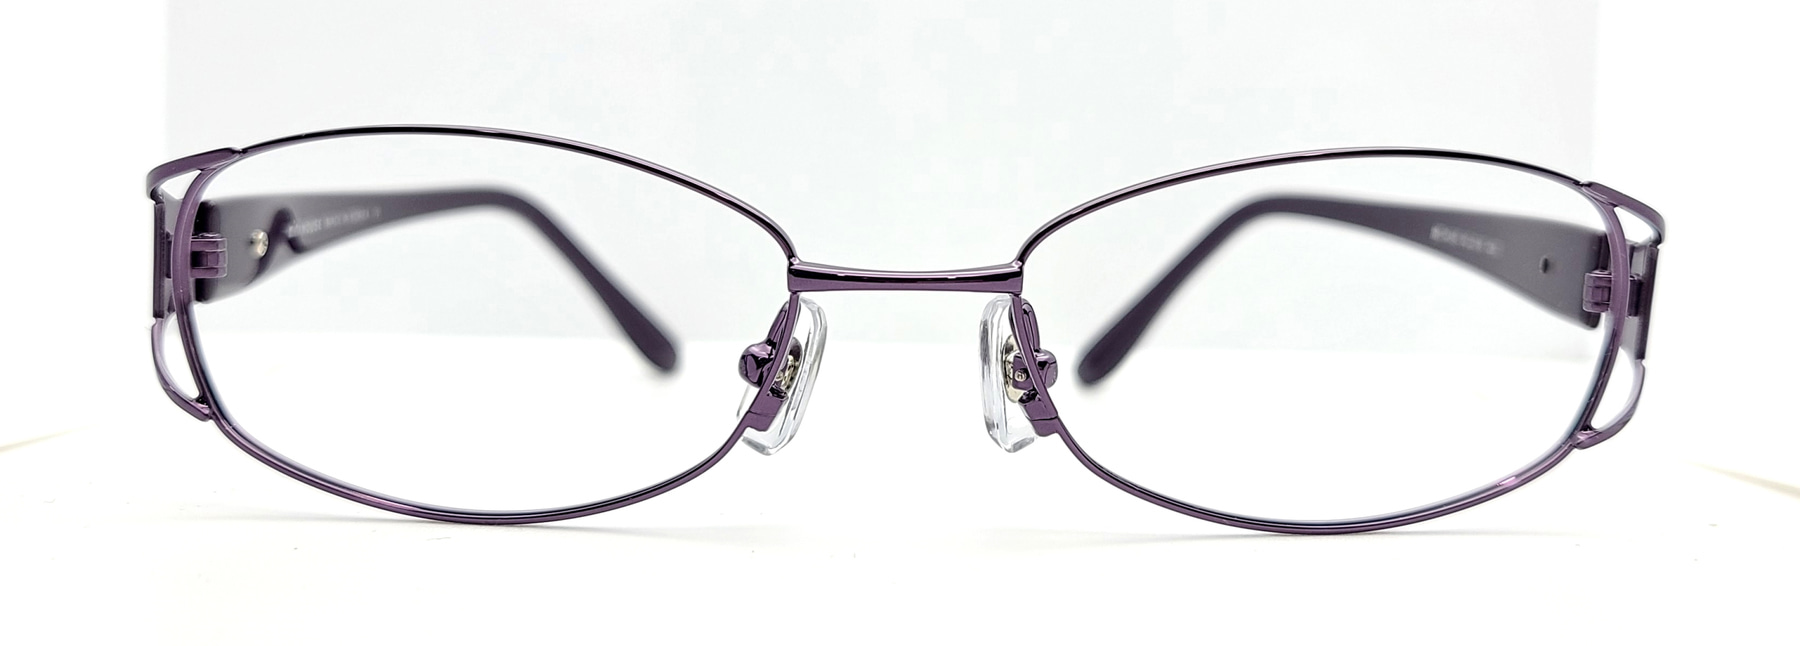 MINIHOUSE M-1240, Korean glasses, sunglasses, eyeglasses, glasses